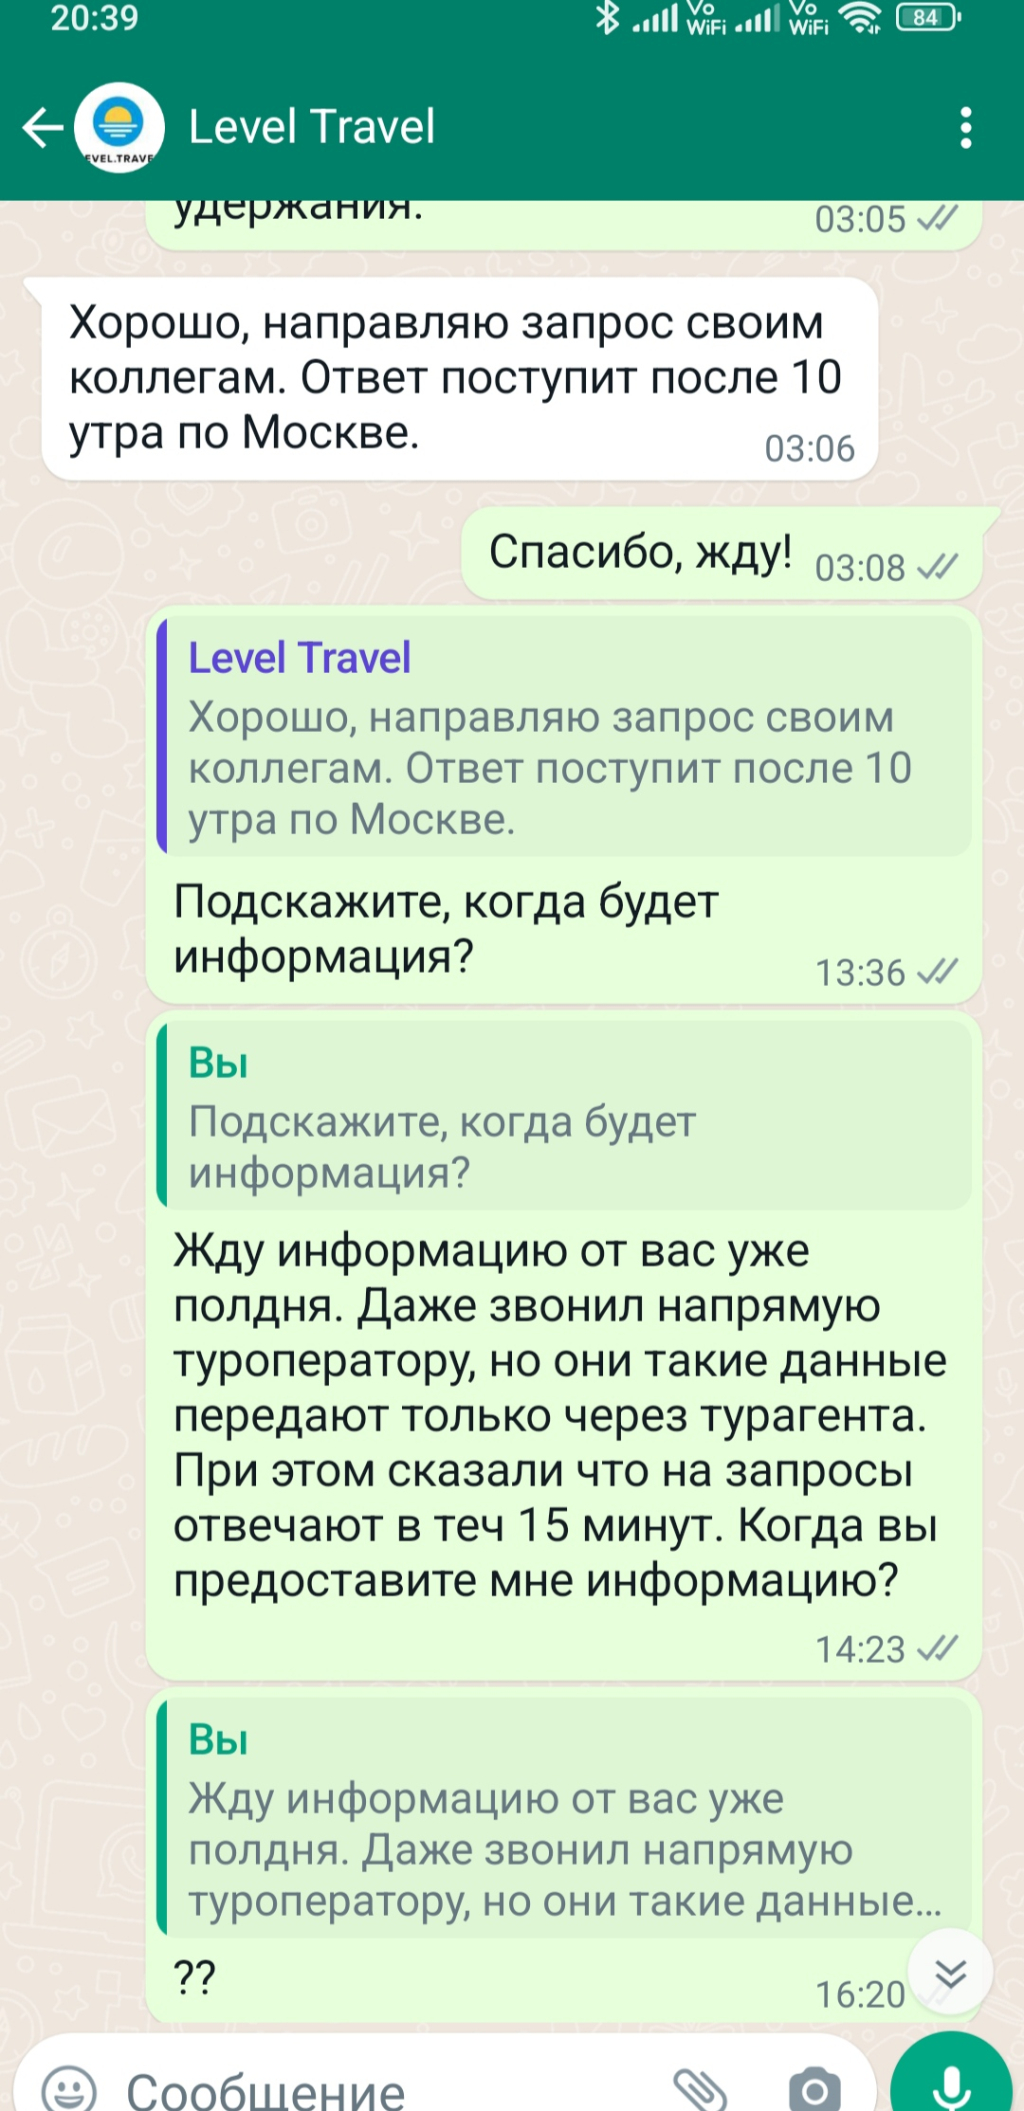 Level.Travel - Сайт онлайн-покупок туров Level Travel